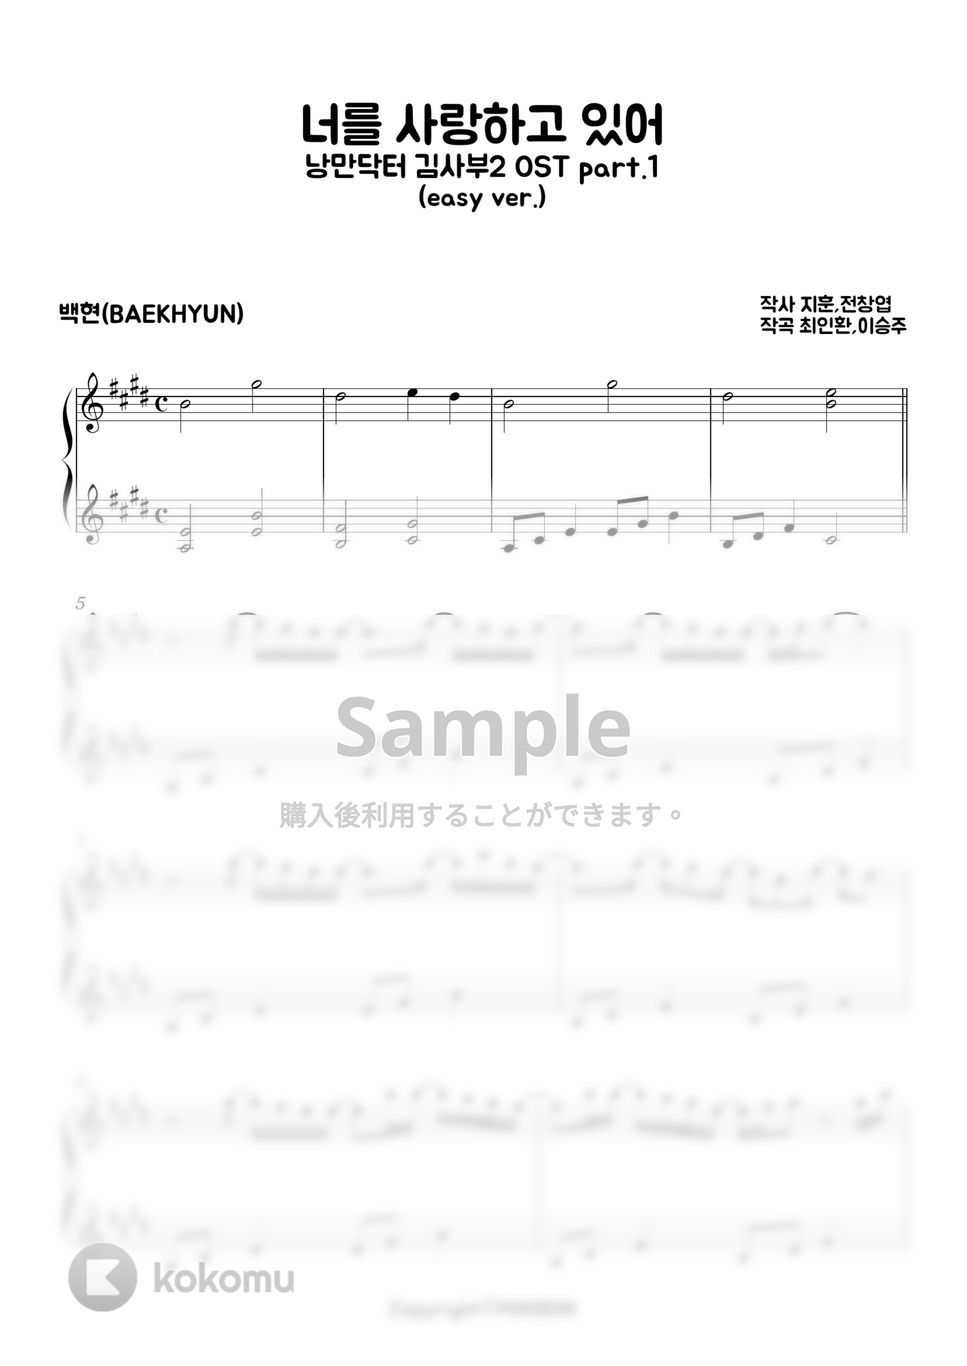 BACKHYUN - My Love (Easy ver.) by MINIBINI